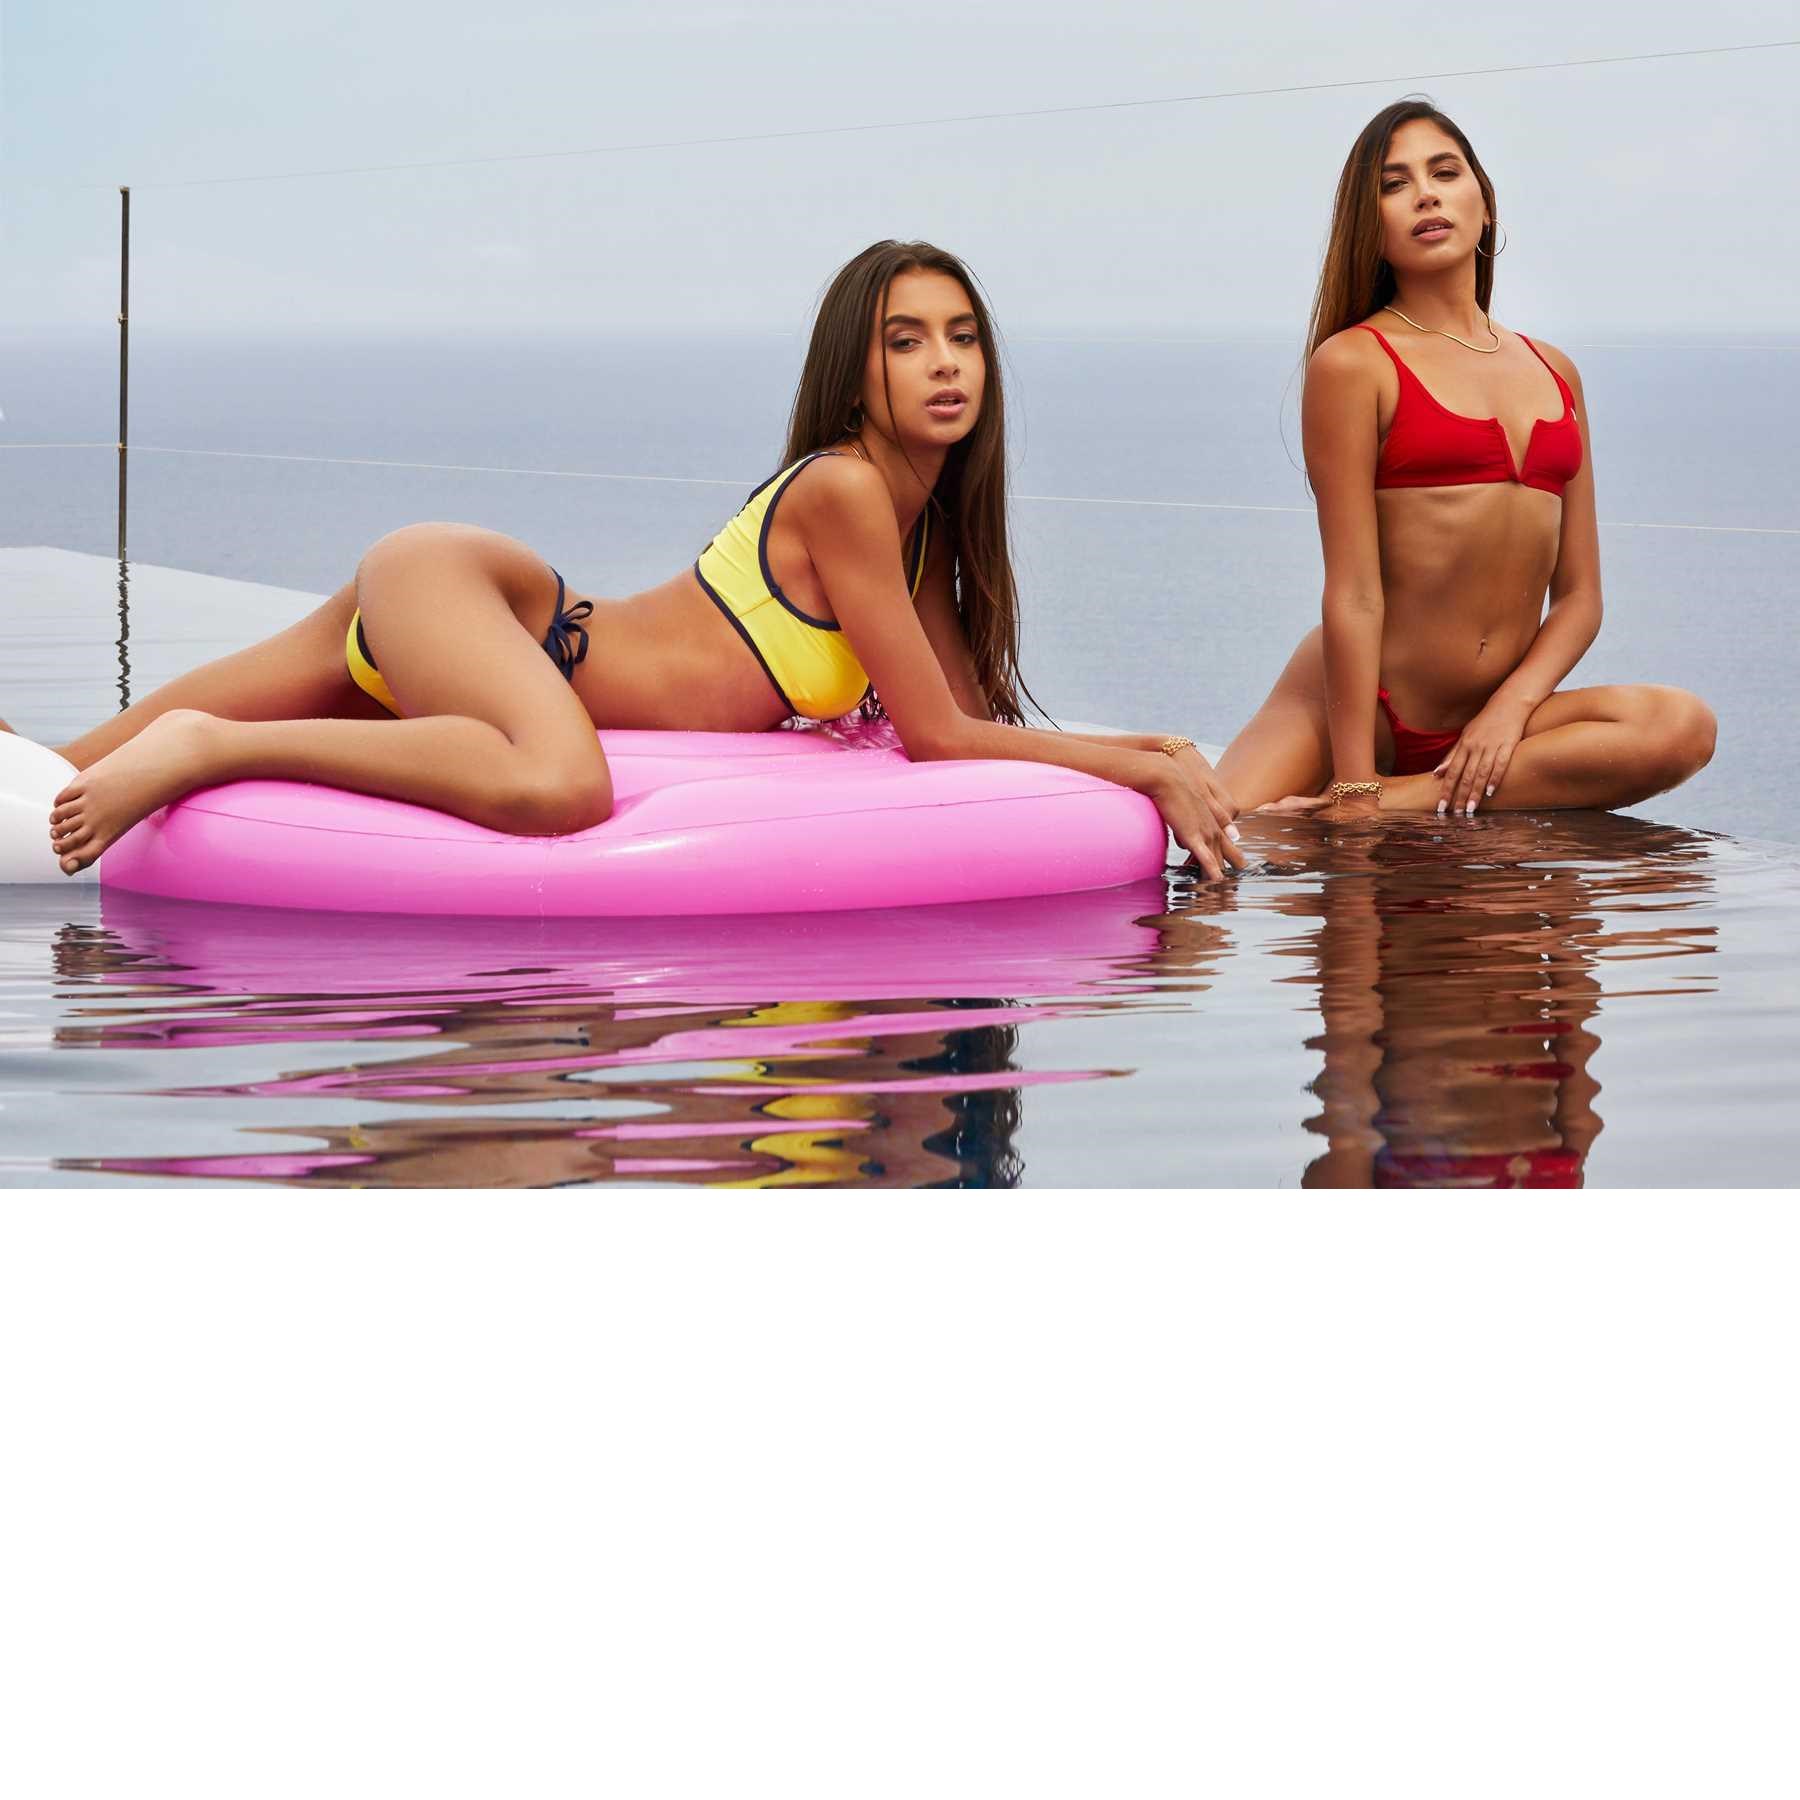 Two brunette females wearing bikinis in water one on raft